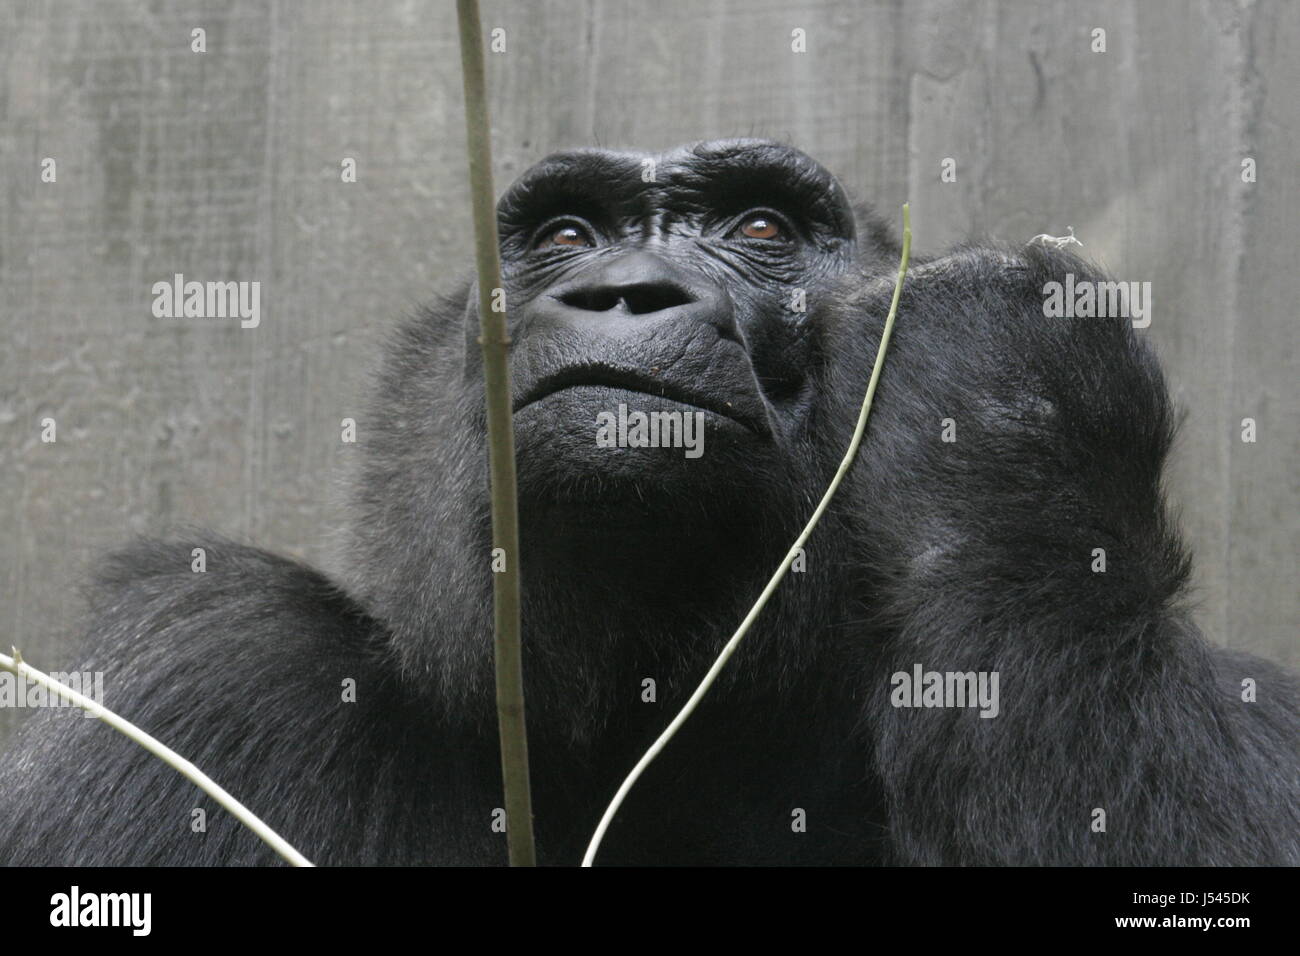 mammal face monkey eyes fist look glancing see view looking peeking looking at Stock Photo